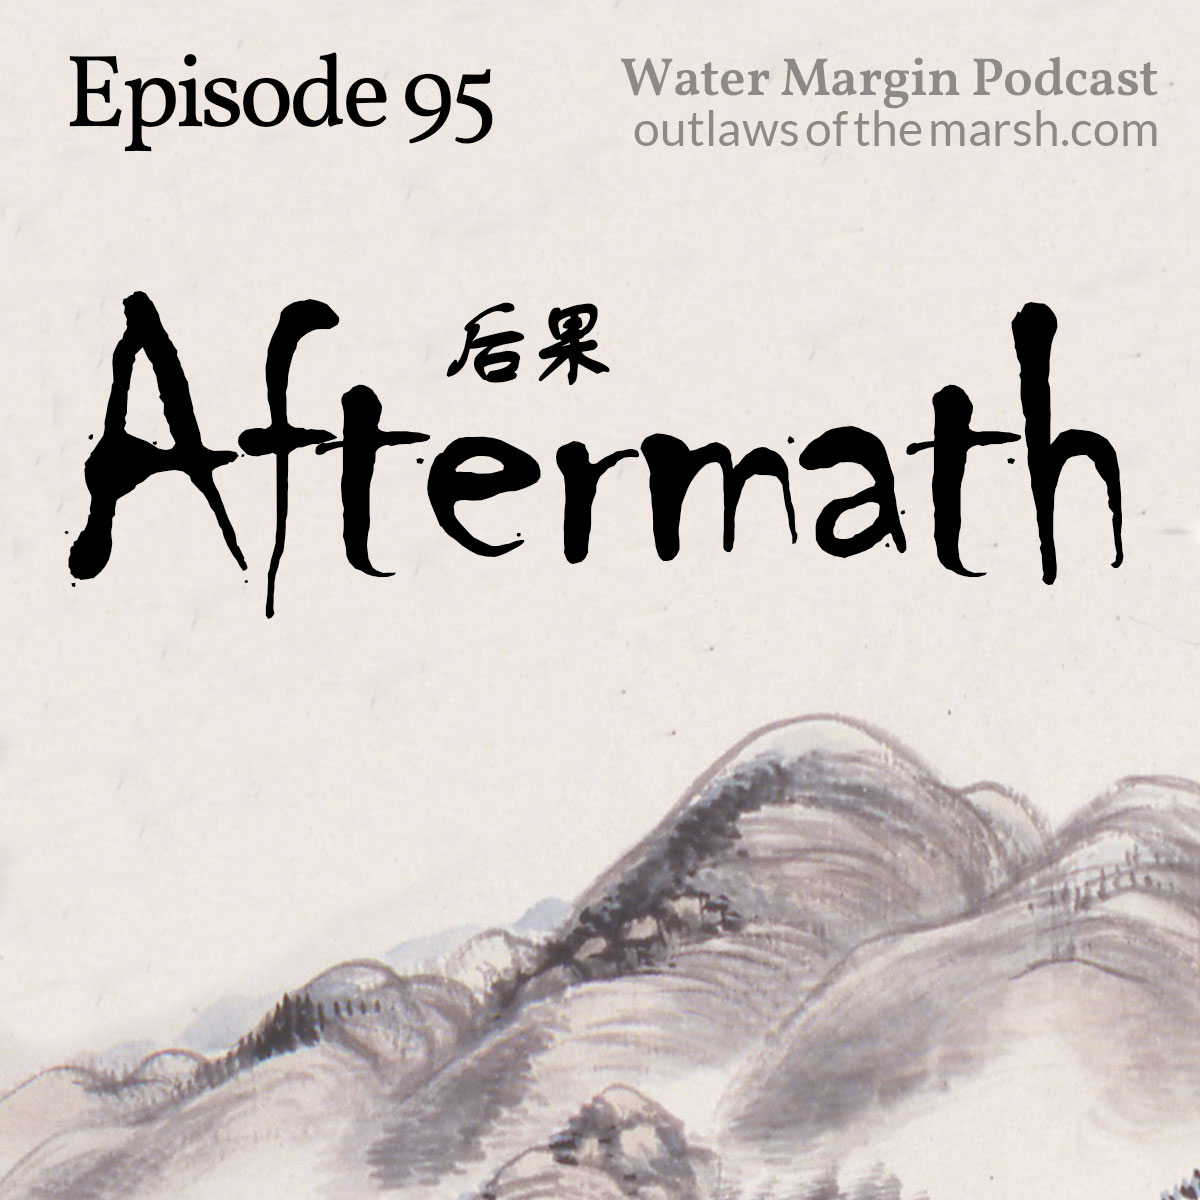 Water Margin Podcast: Episode 095